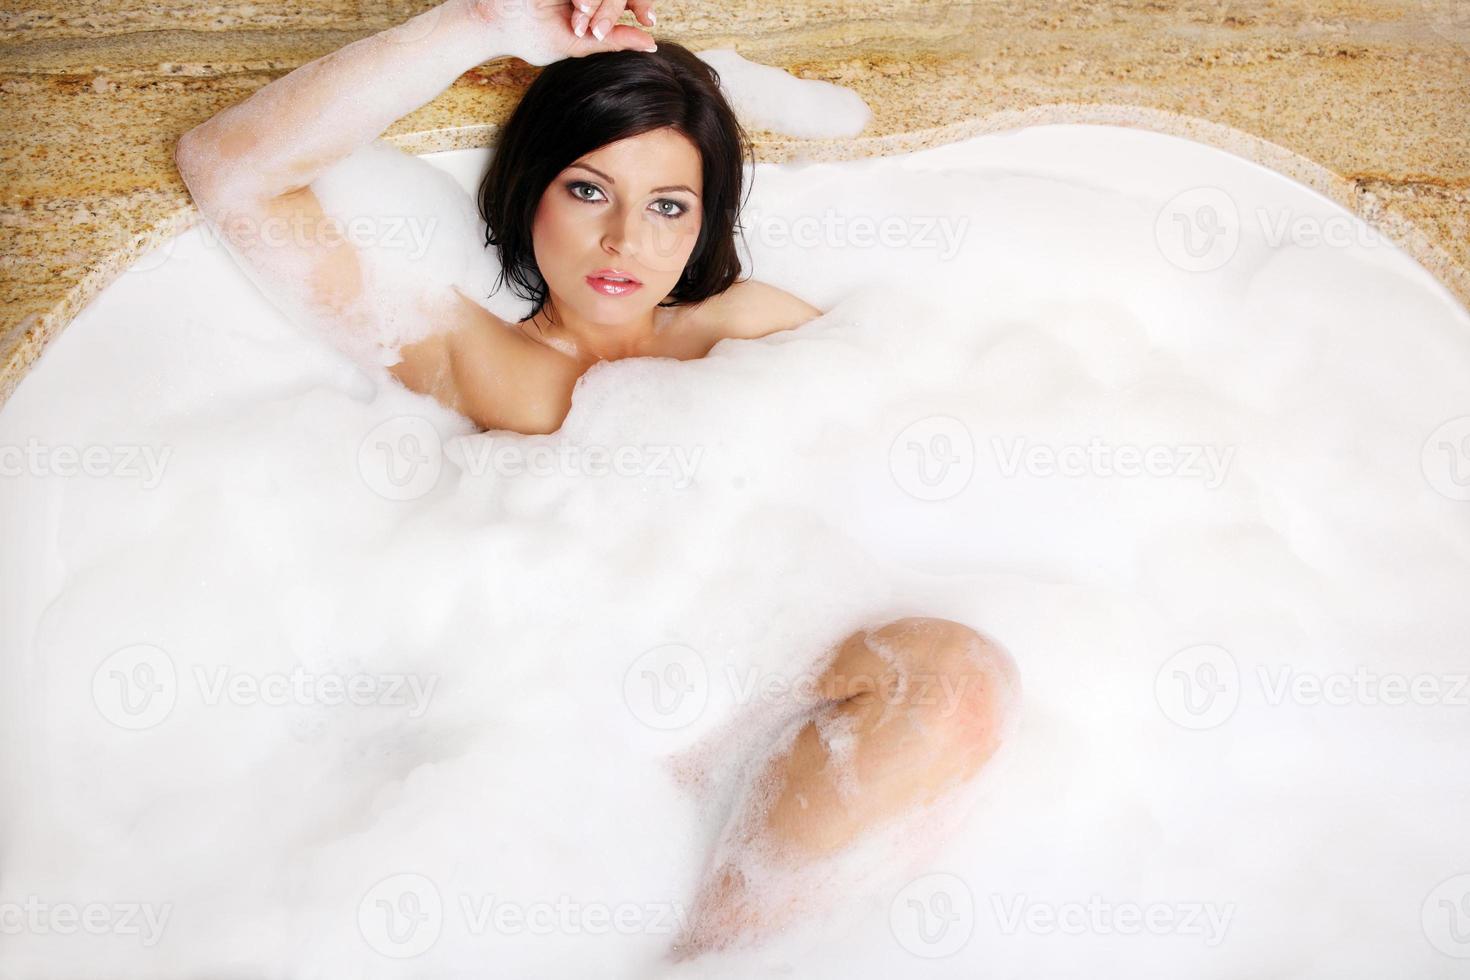 Bubble-bath photo